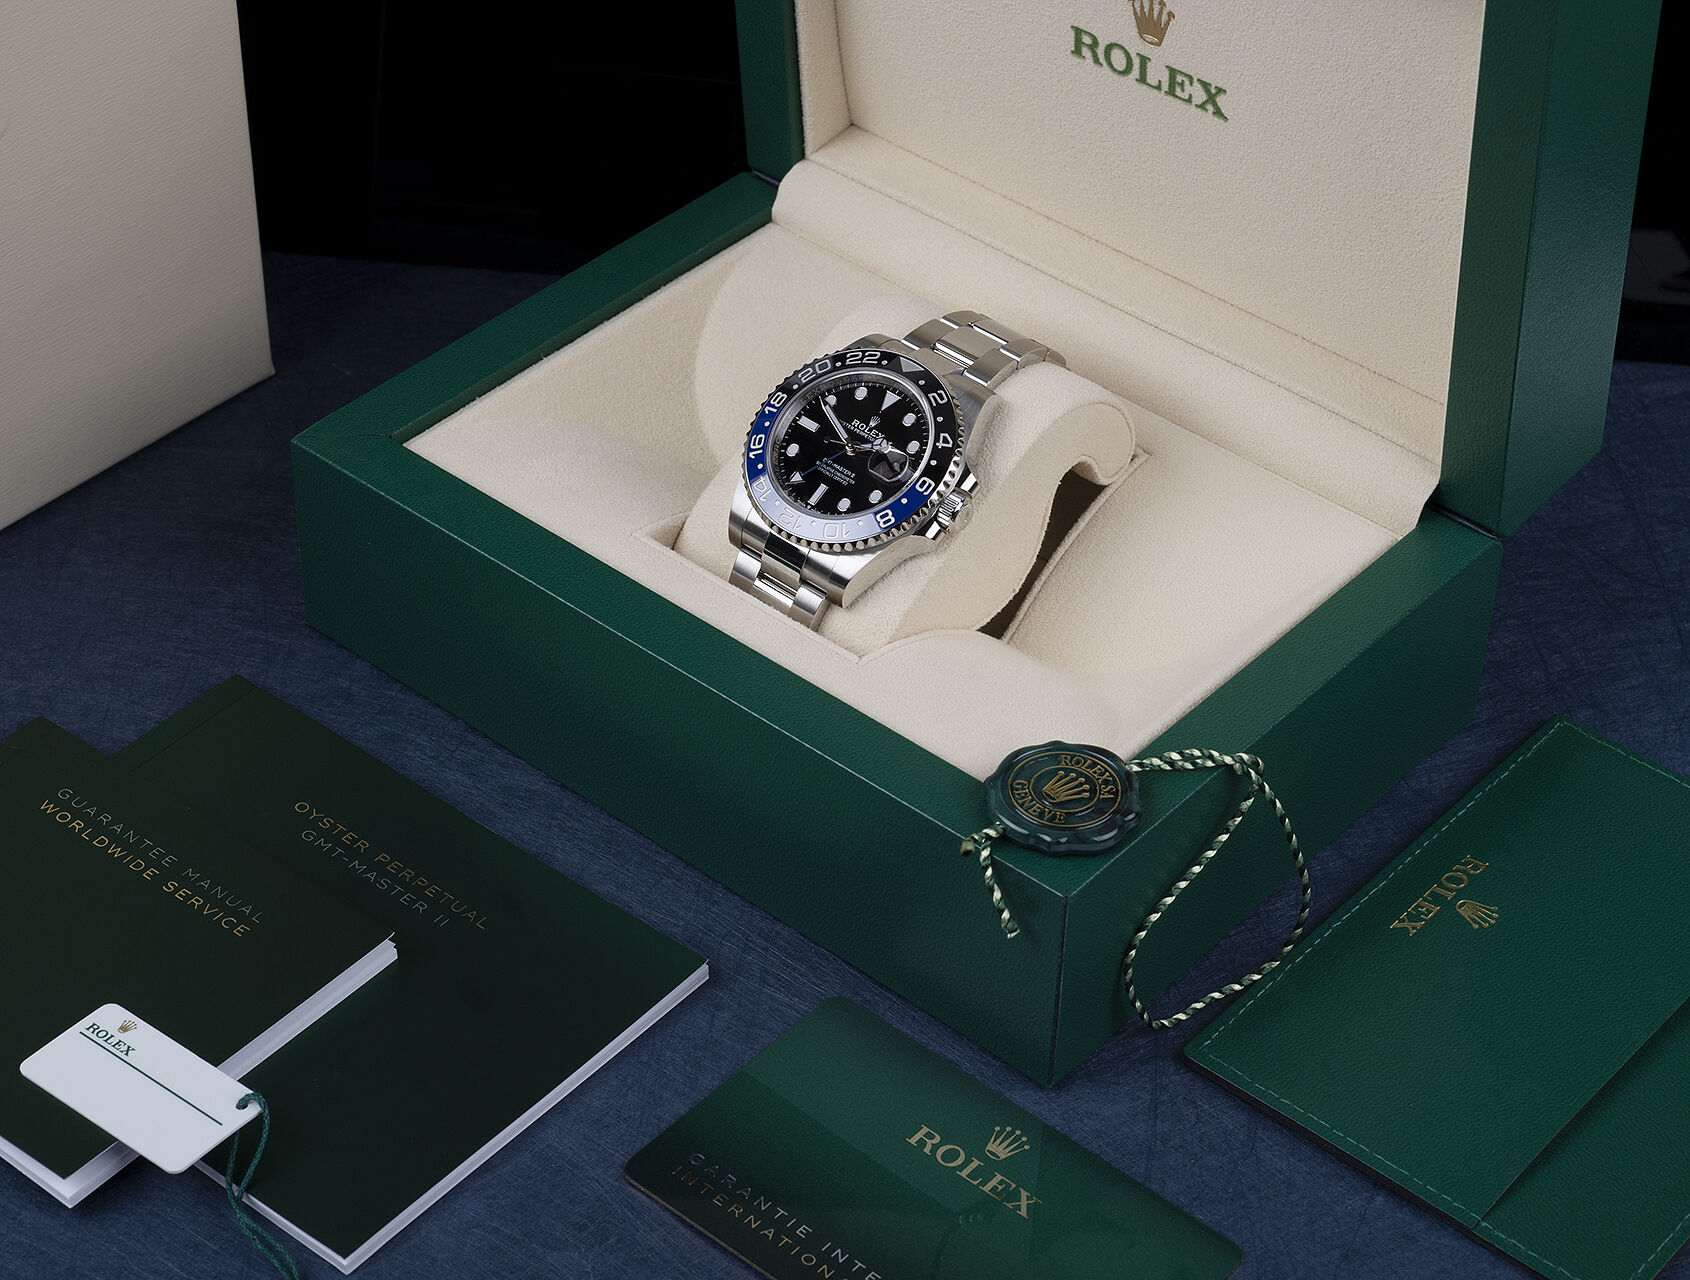 ref 126710BLNR | 126710BLNR - Box & Certificate | Rolex GMT-Master II